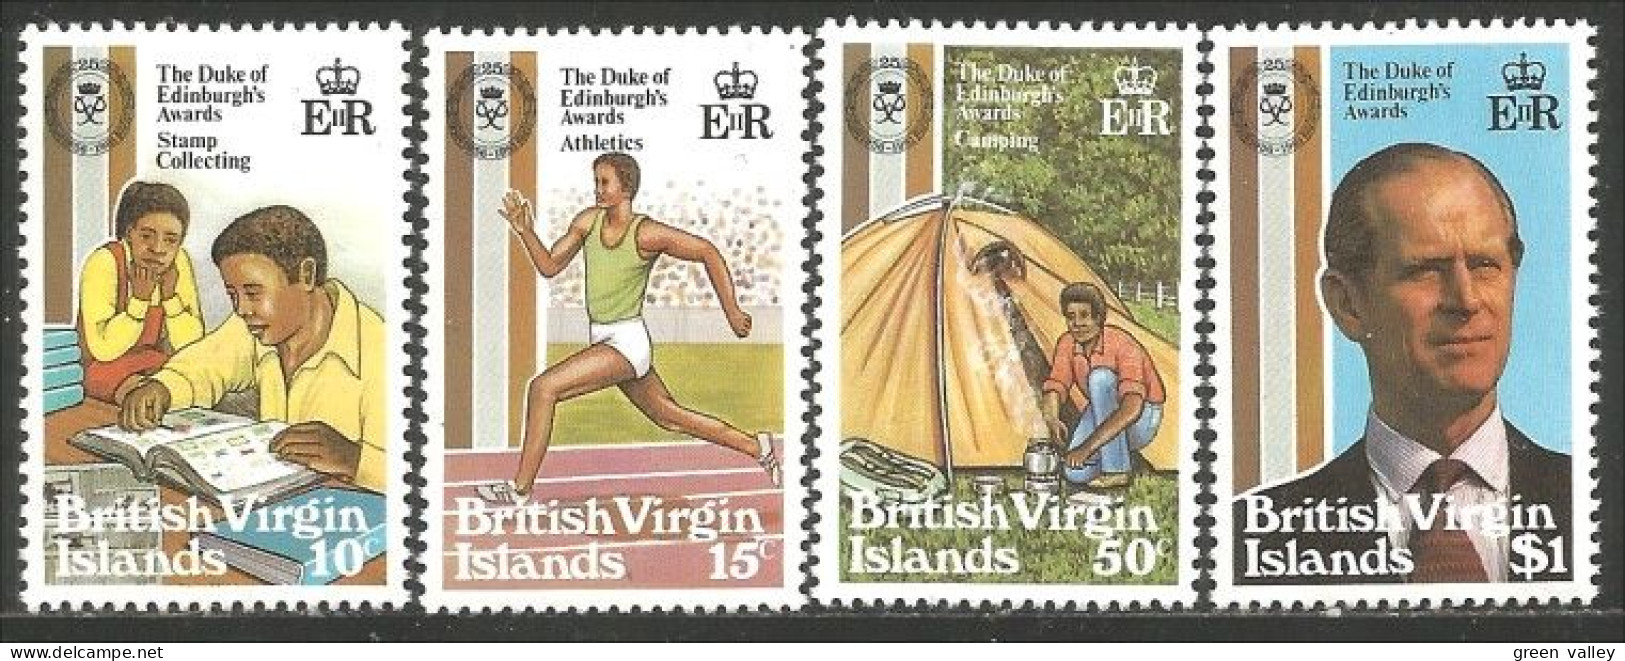 934 British Virgin Islands Camping Athletics Stamp Collecting Philatelie Course Edinburgh MNH ** Neuf SC (VIR-40) - Iles Vièrges Britanniques